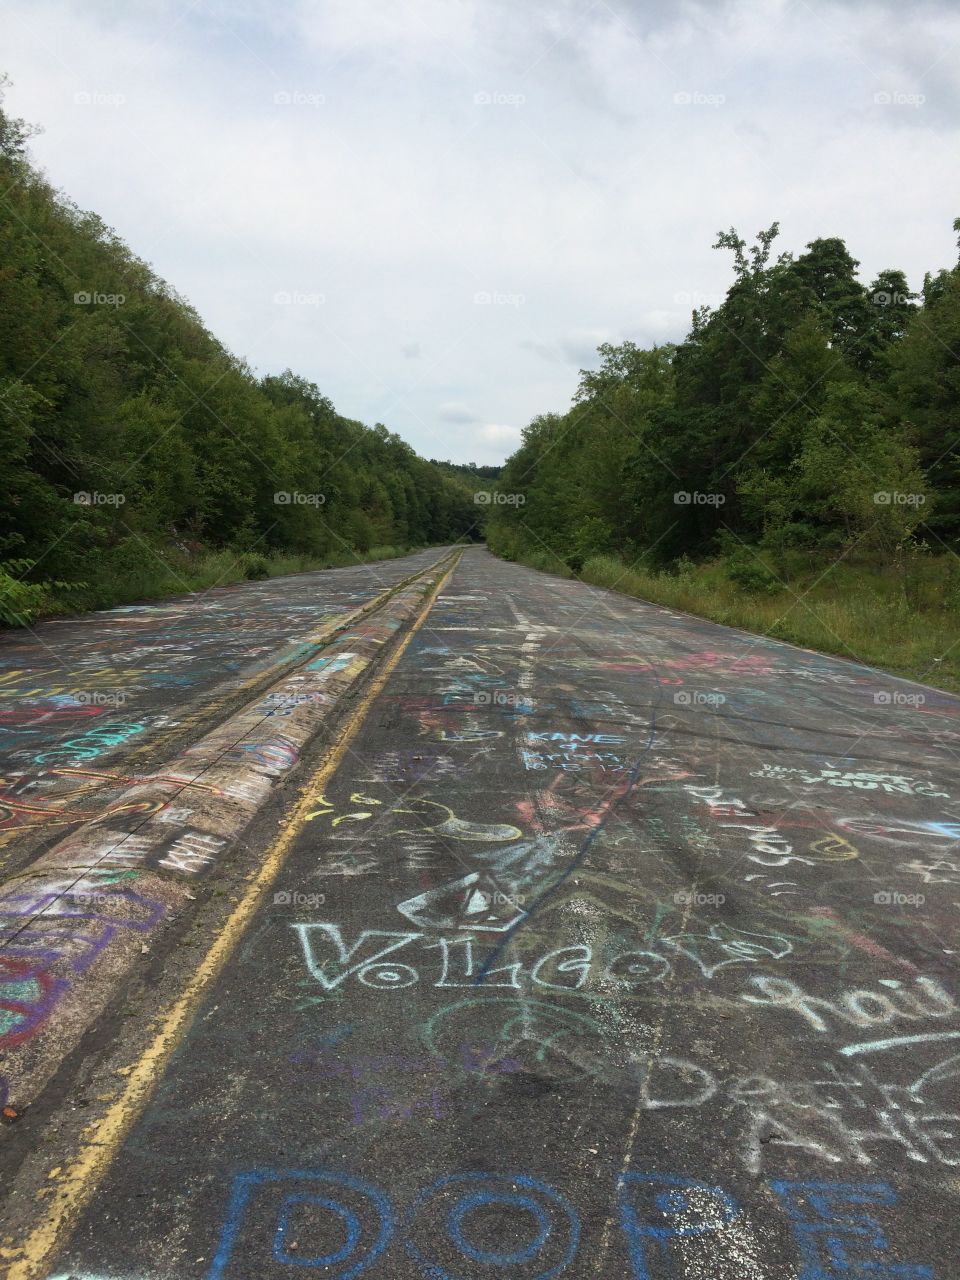 Centralia, PA graffiti highway